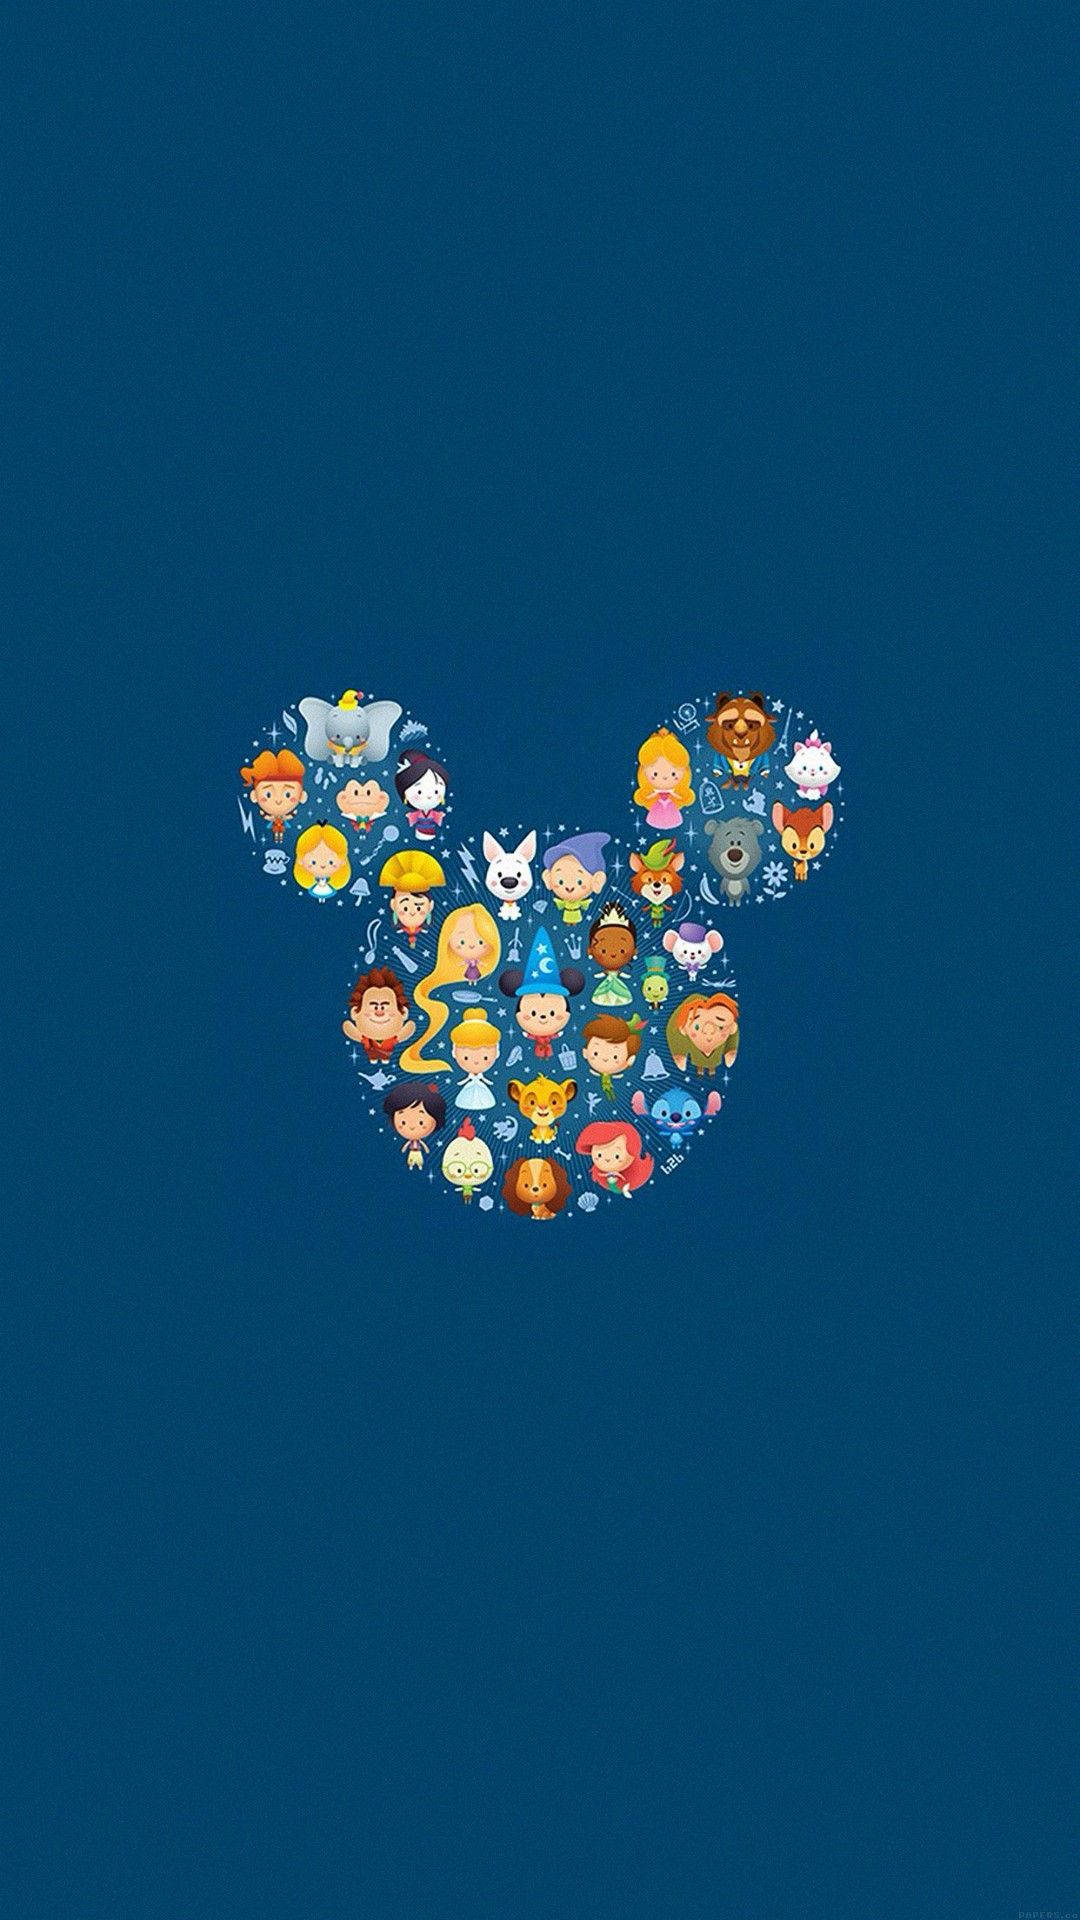 Cute Disney Characters In Mickey Wallpaper